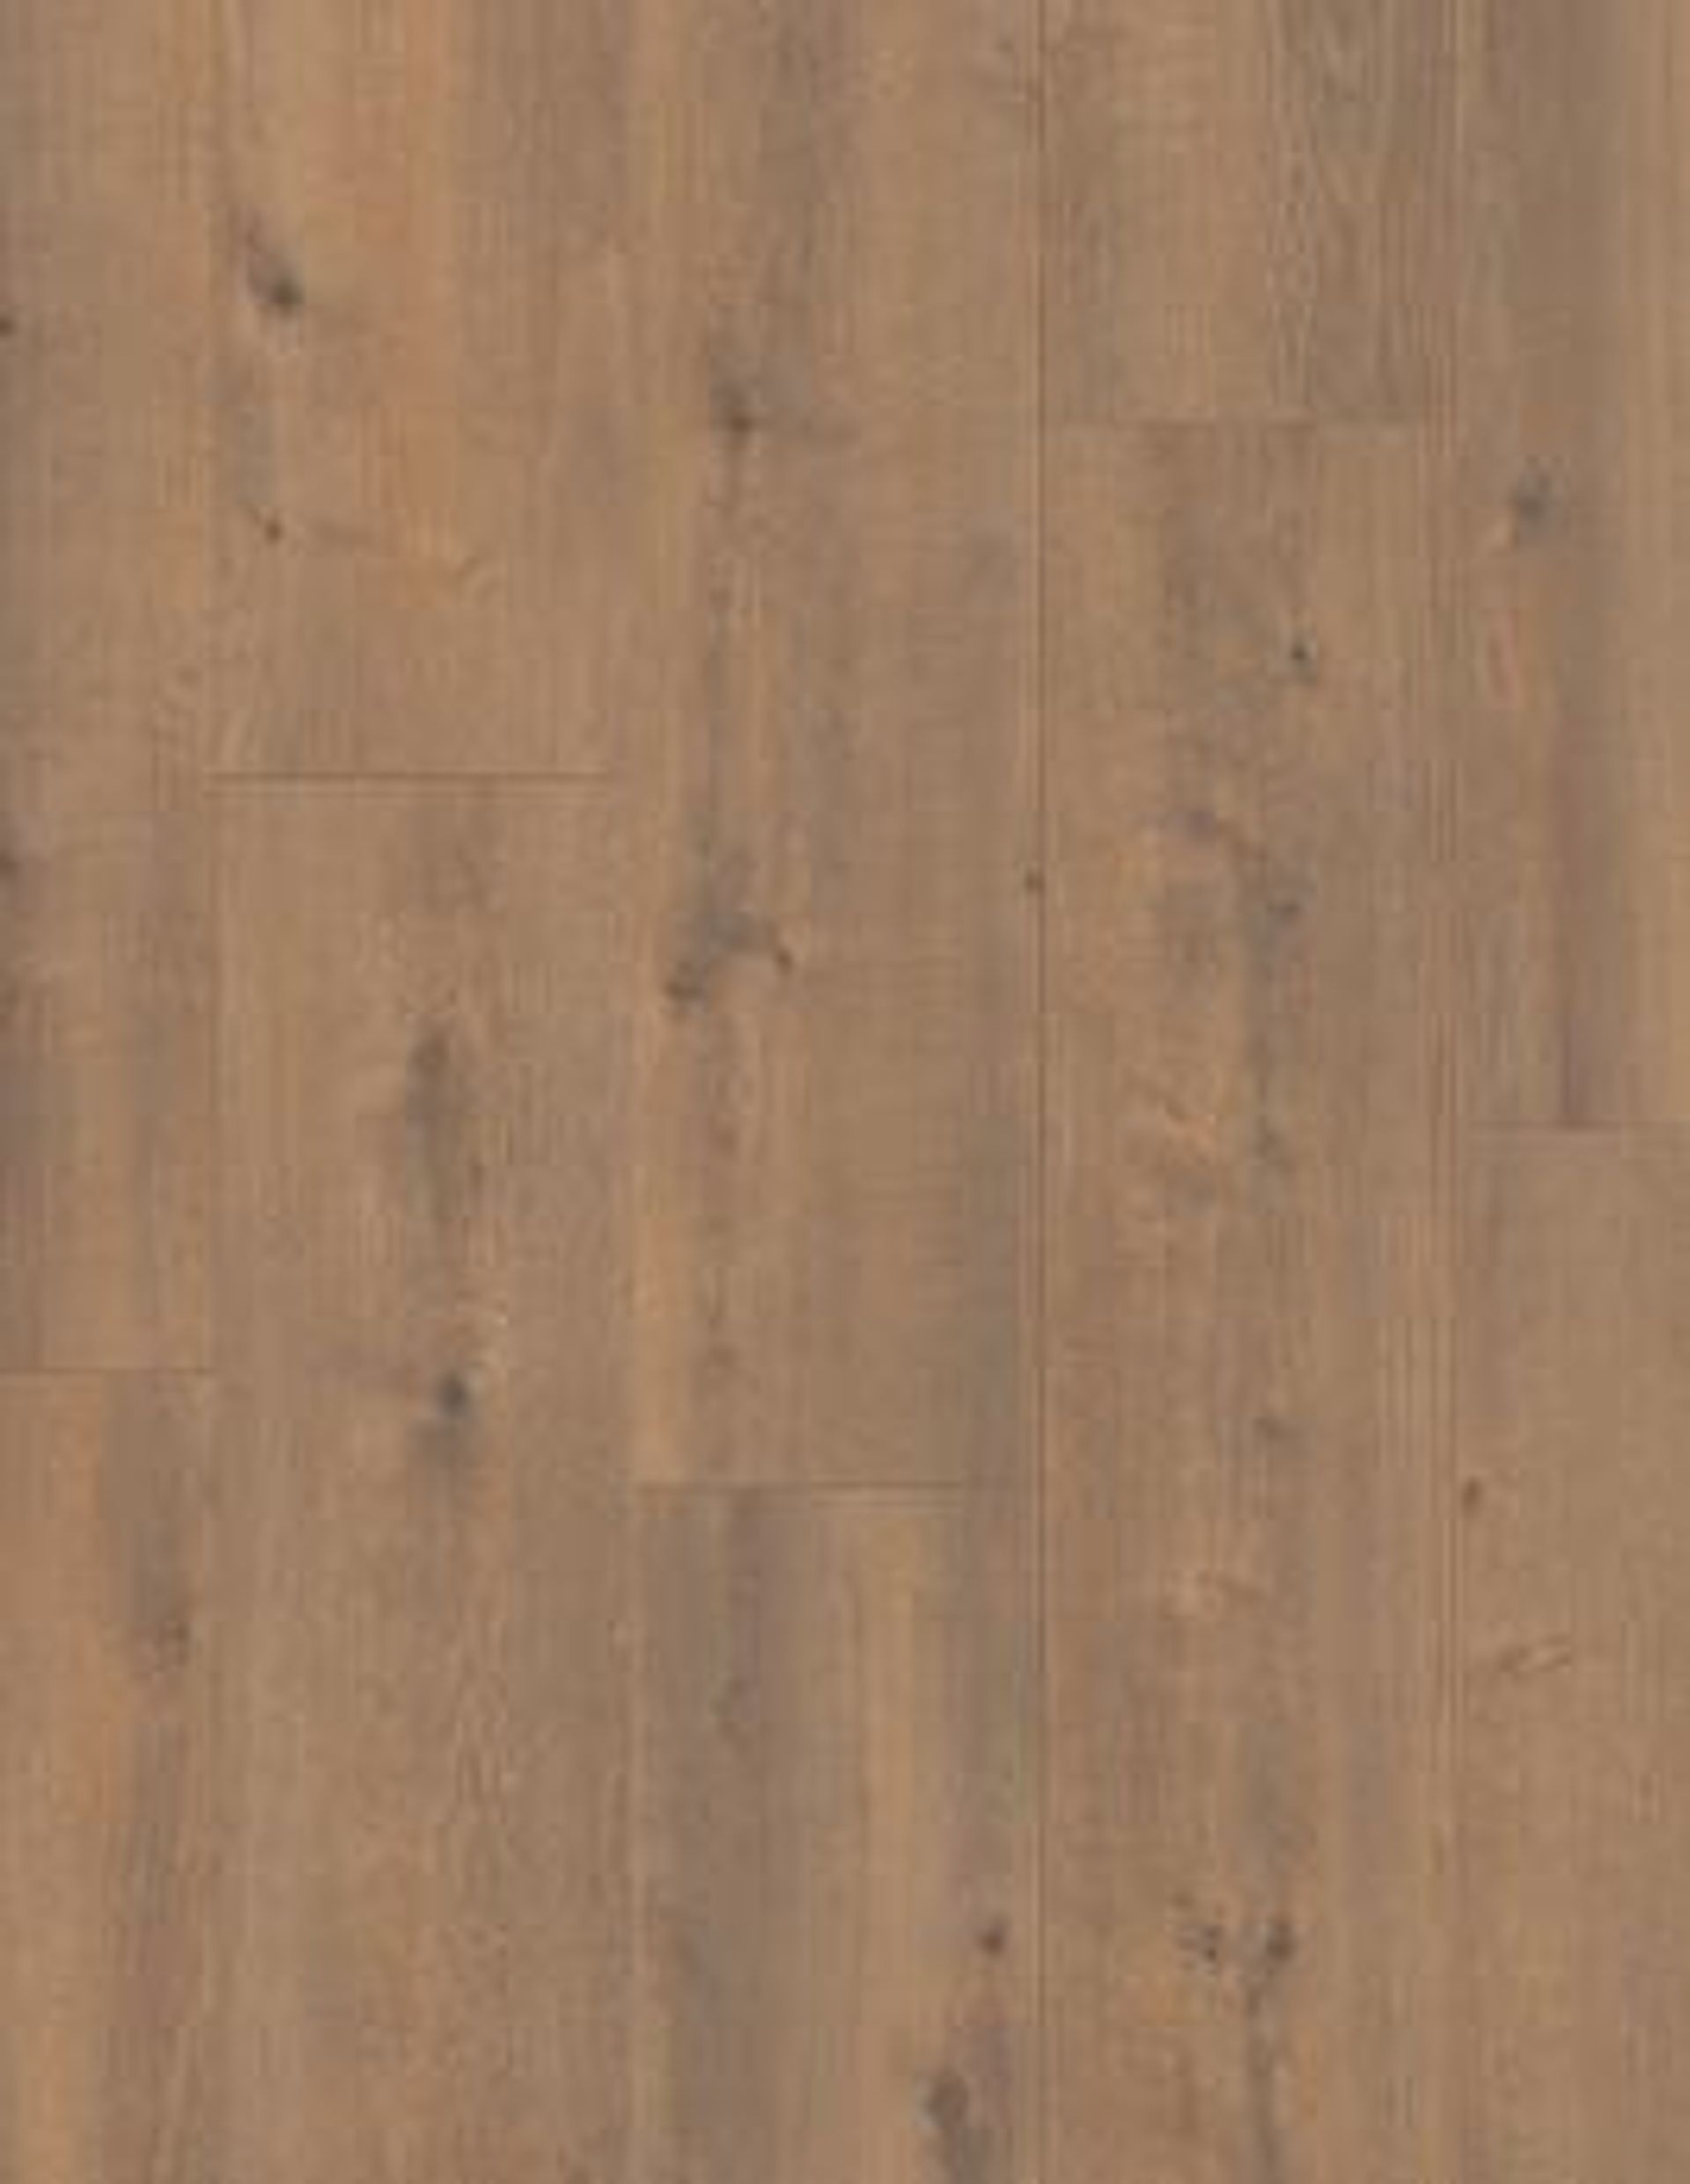 Sol stratifié EASYLIFE LEGEND 2 Easylife, aspect Bois Chêne marron, lame 19.20 x 126.10 cm